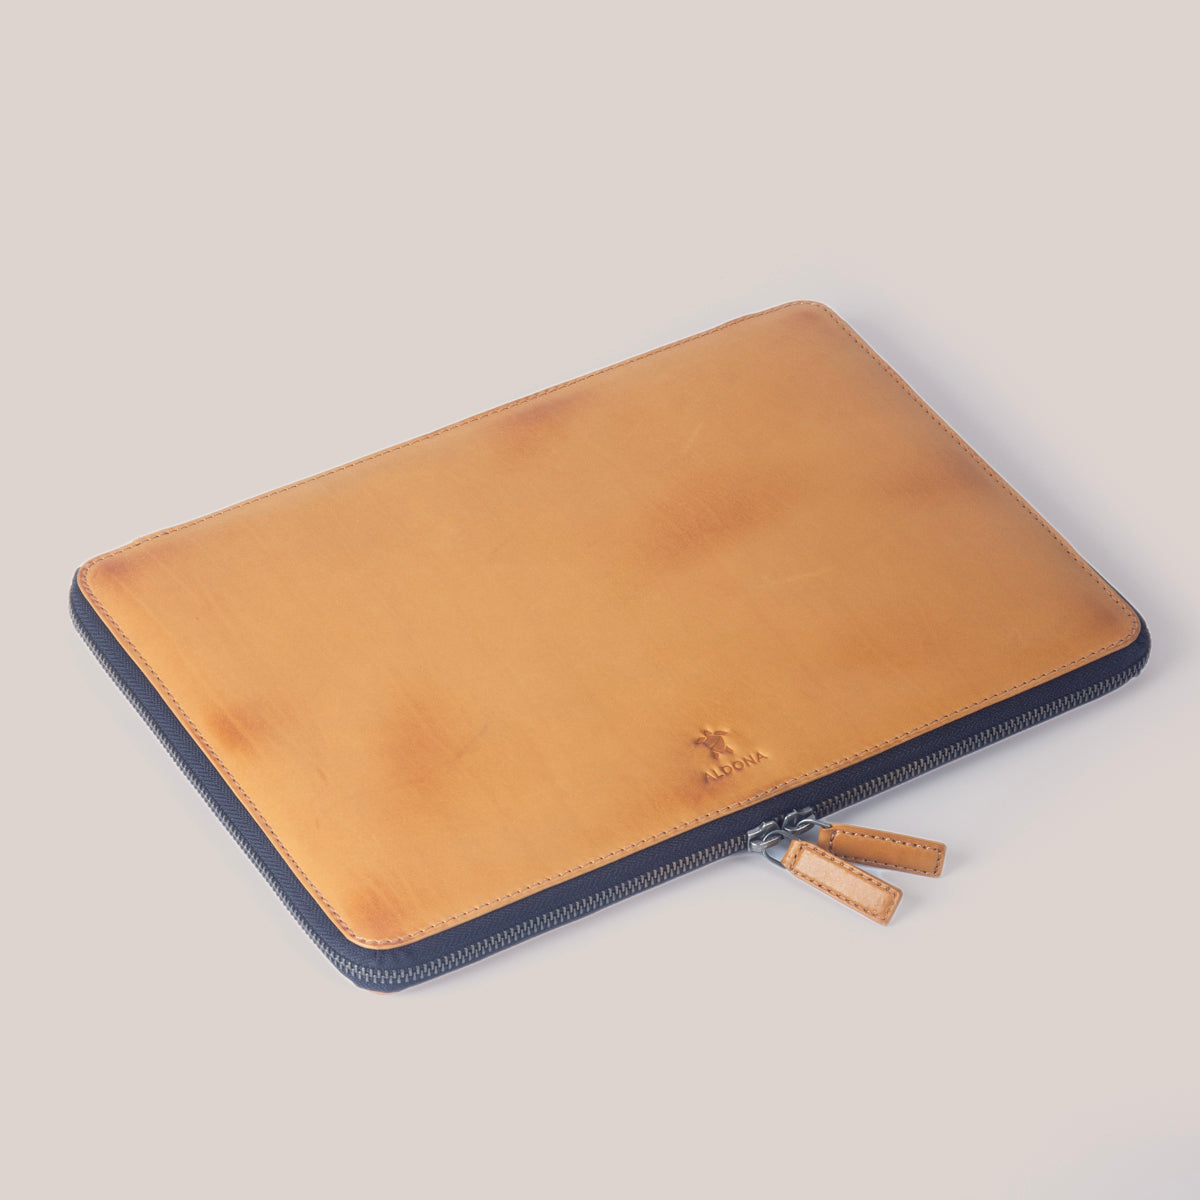 Microsoft Surface Book 13.5 Zippered Laptop Case - Vintage Tan